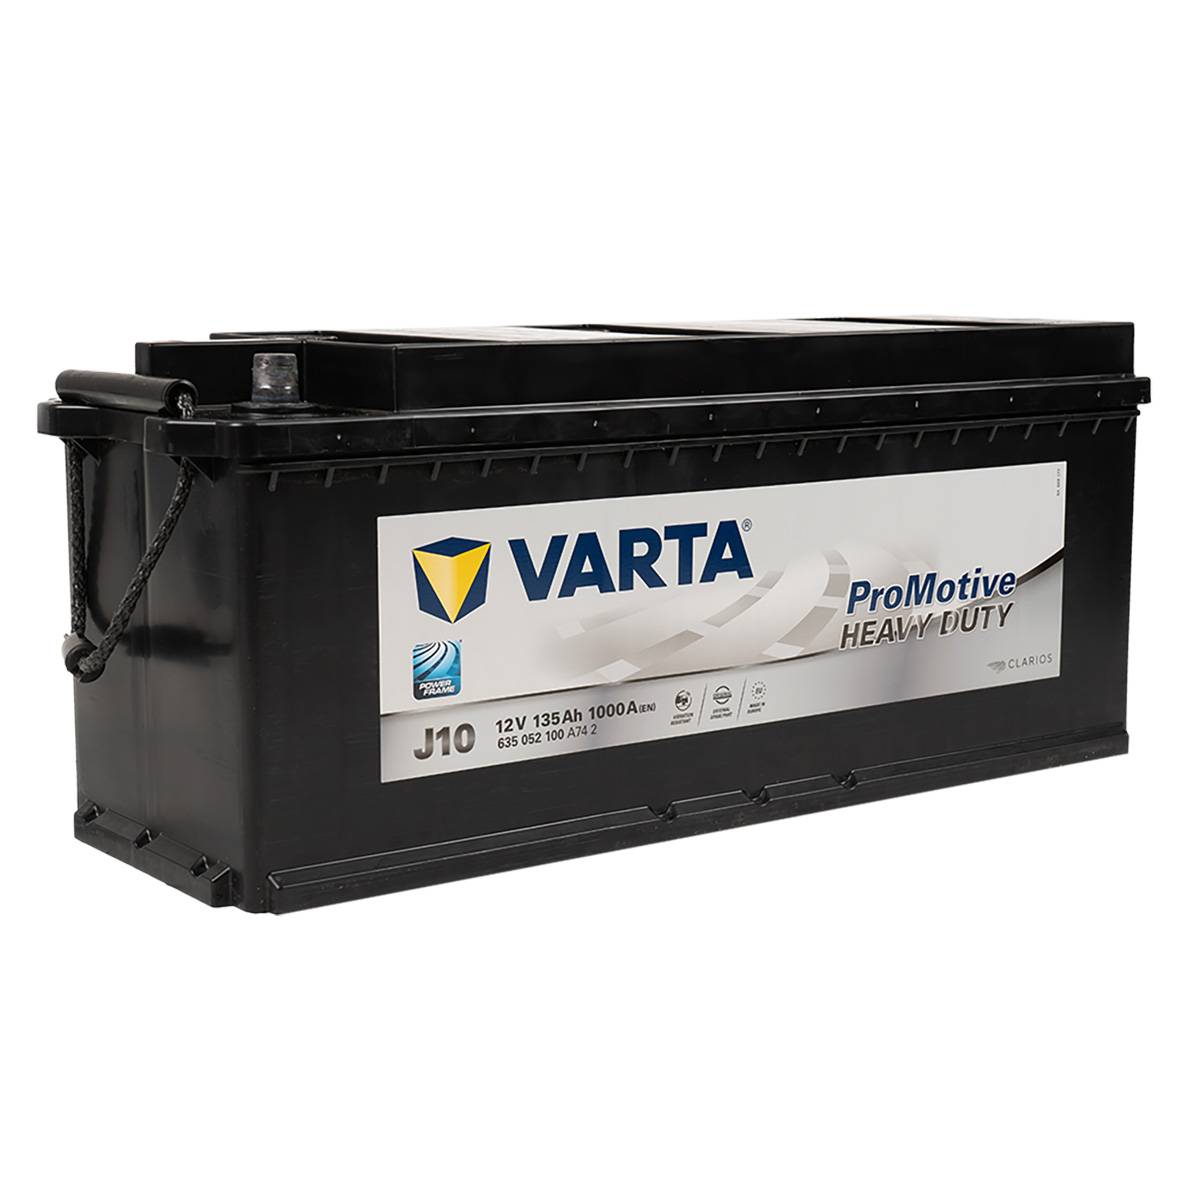 etisk Patent Fremskreden Varta ProMotive HD 635 052 100 A742 J10 12Volt 135Ah 1000A/EN Starter  battery | Starter batteries | Motorhomes & RV | Car batteries | Batteries  by application | Akkusys.Shop International